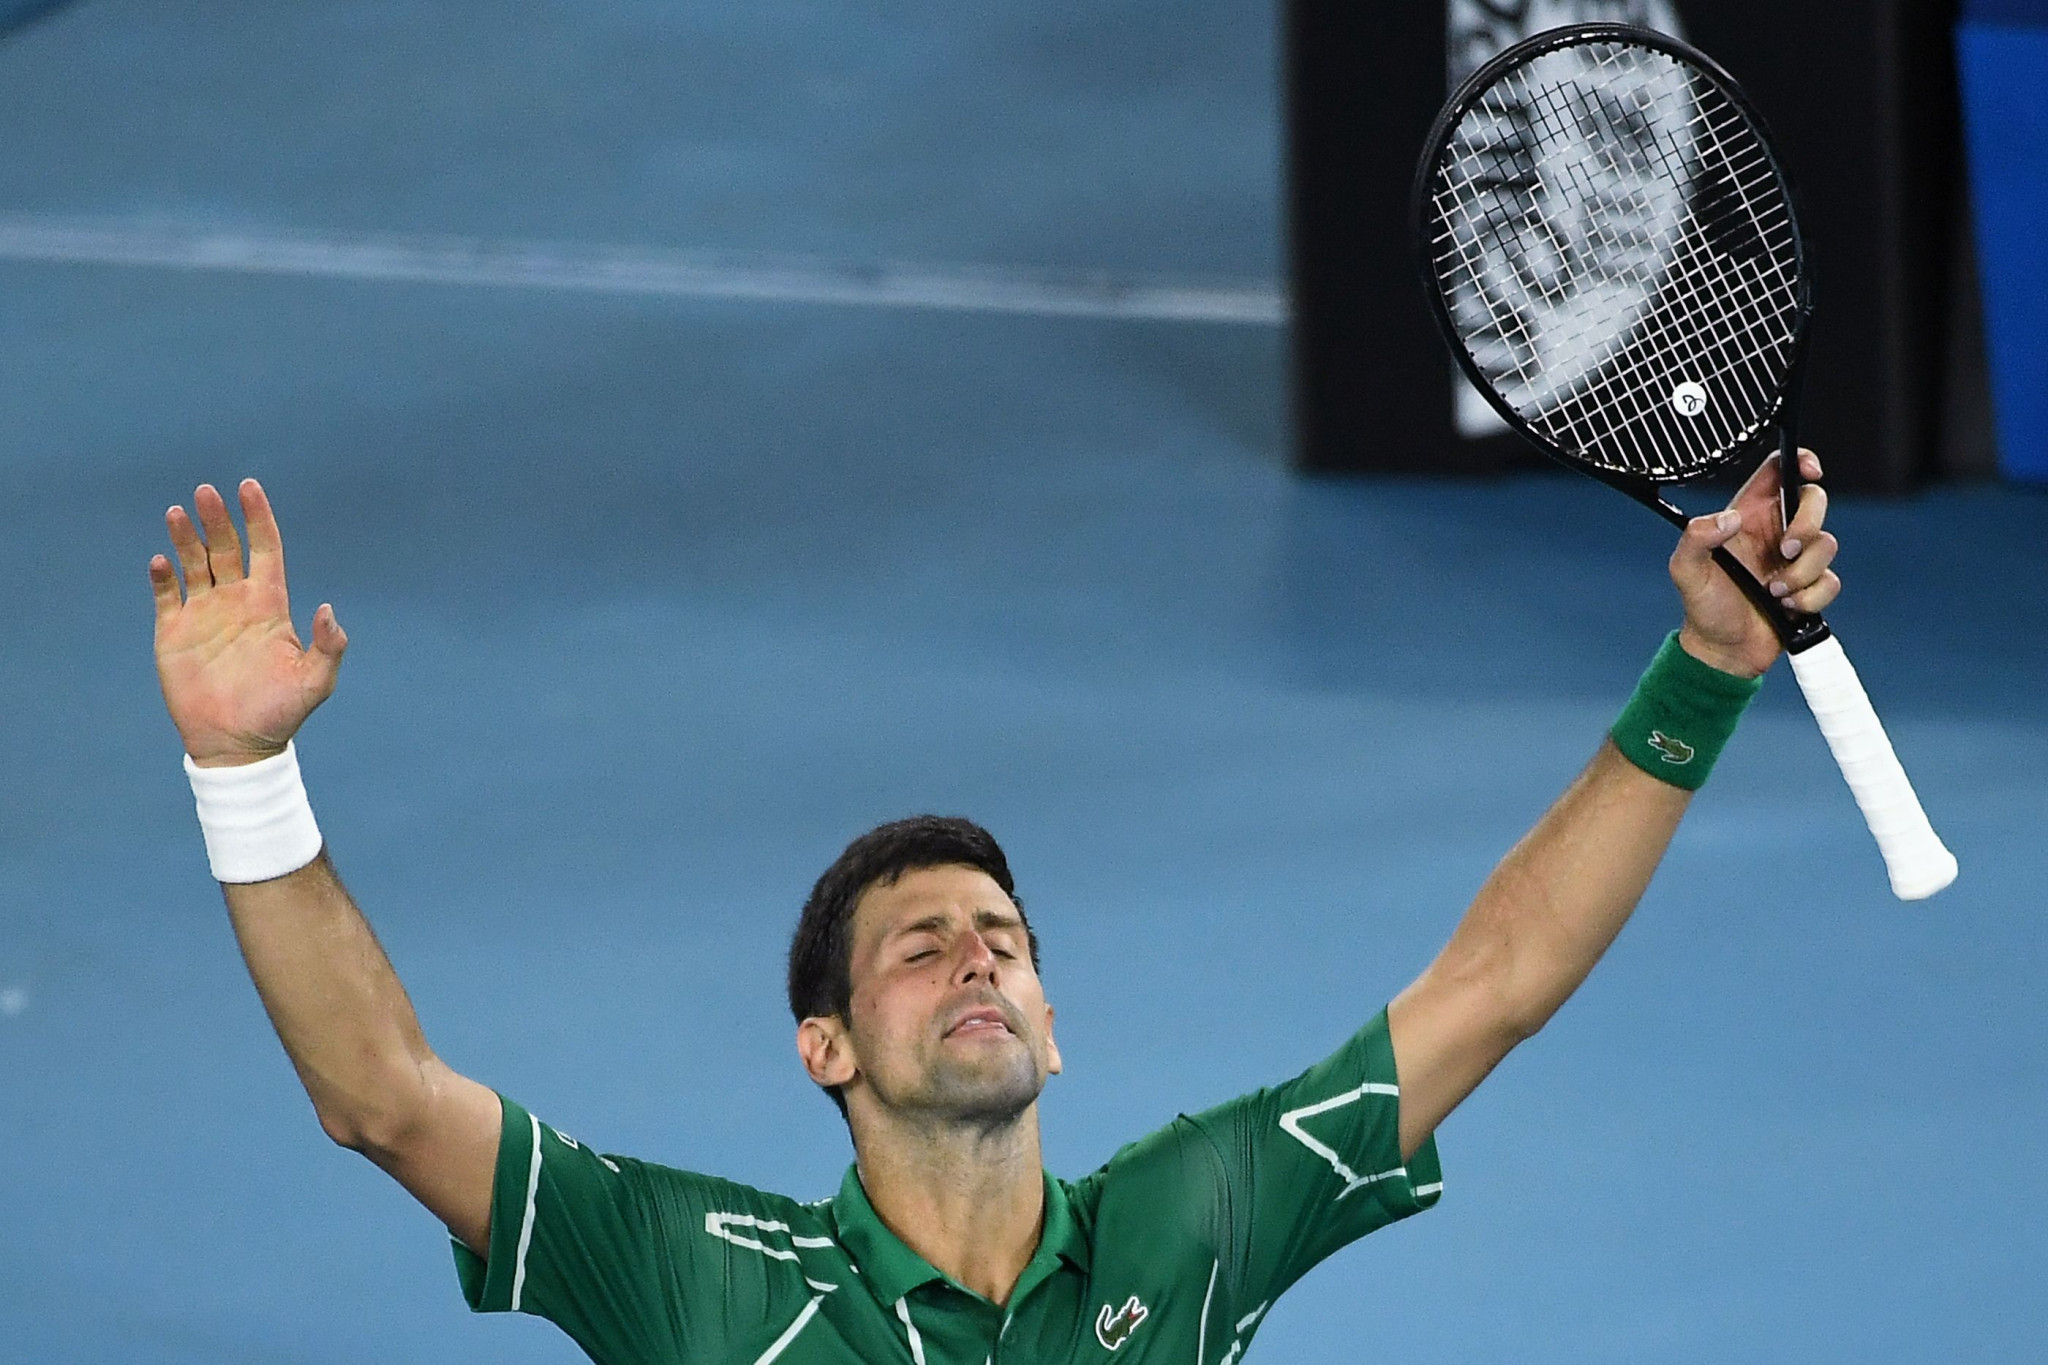 Novak Djokovic brushed aside Roger Federer to reach the men's final ©Getty Images